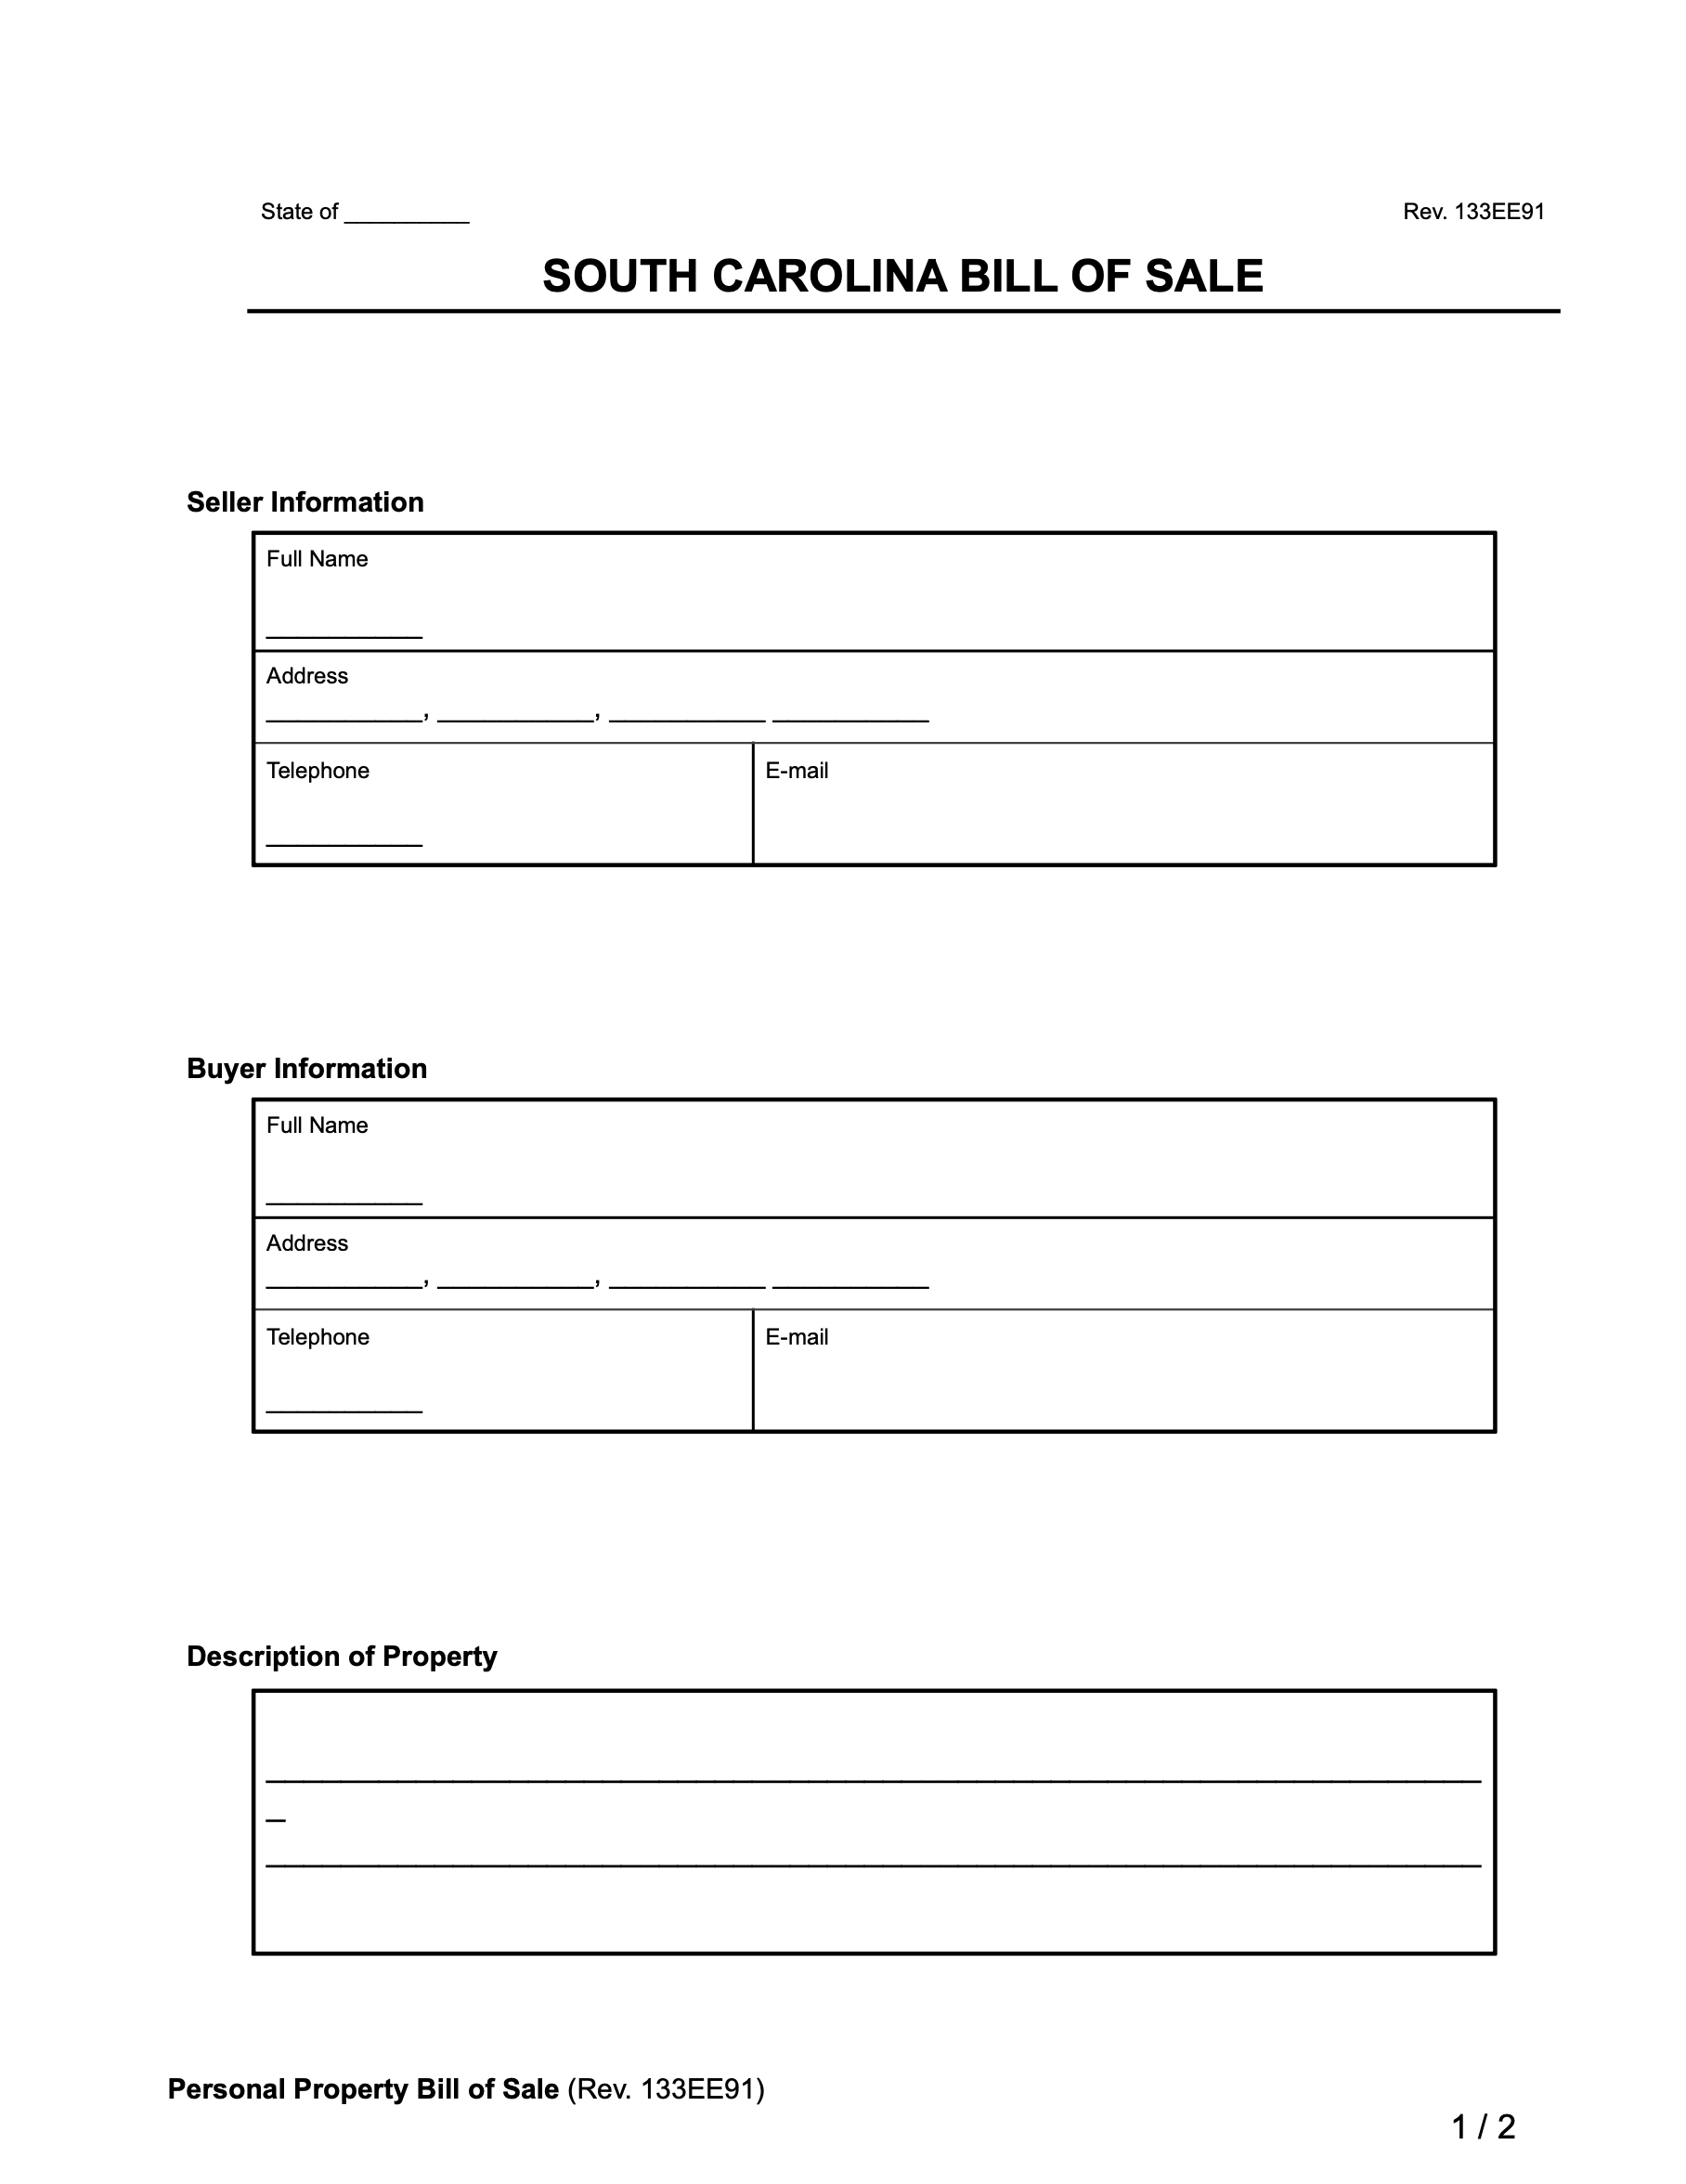 south carolina bill of sale form